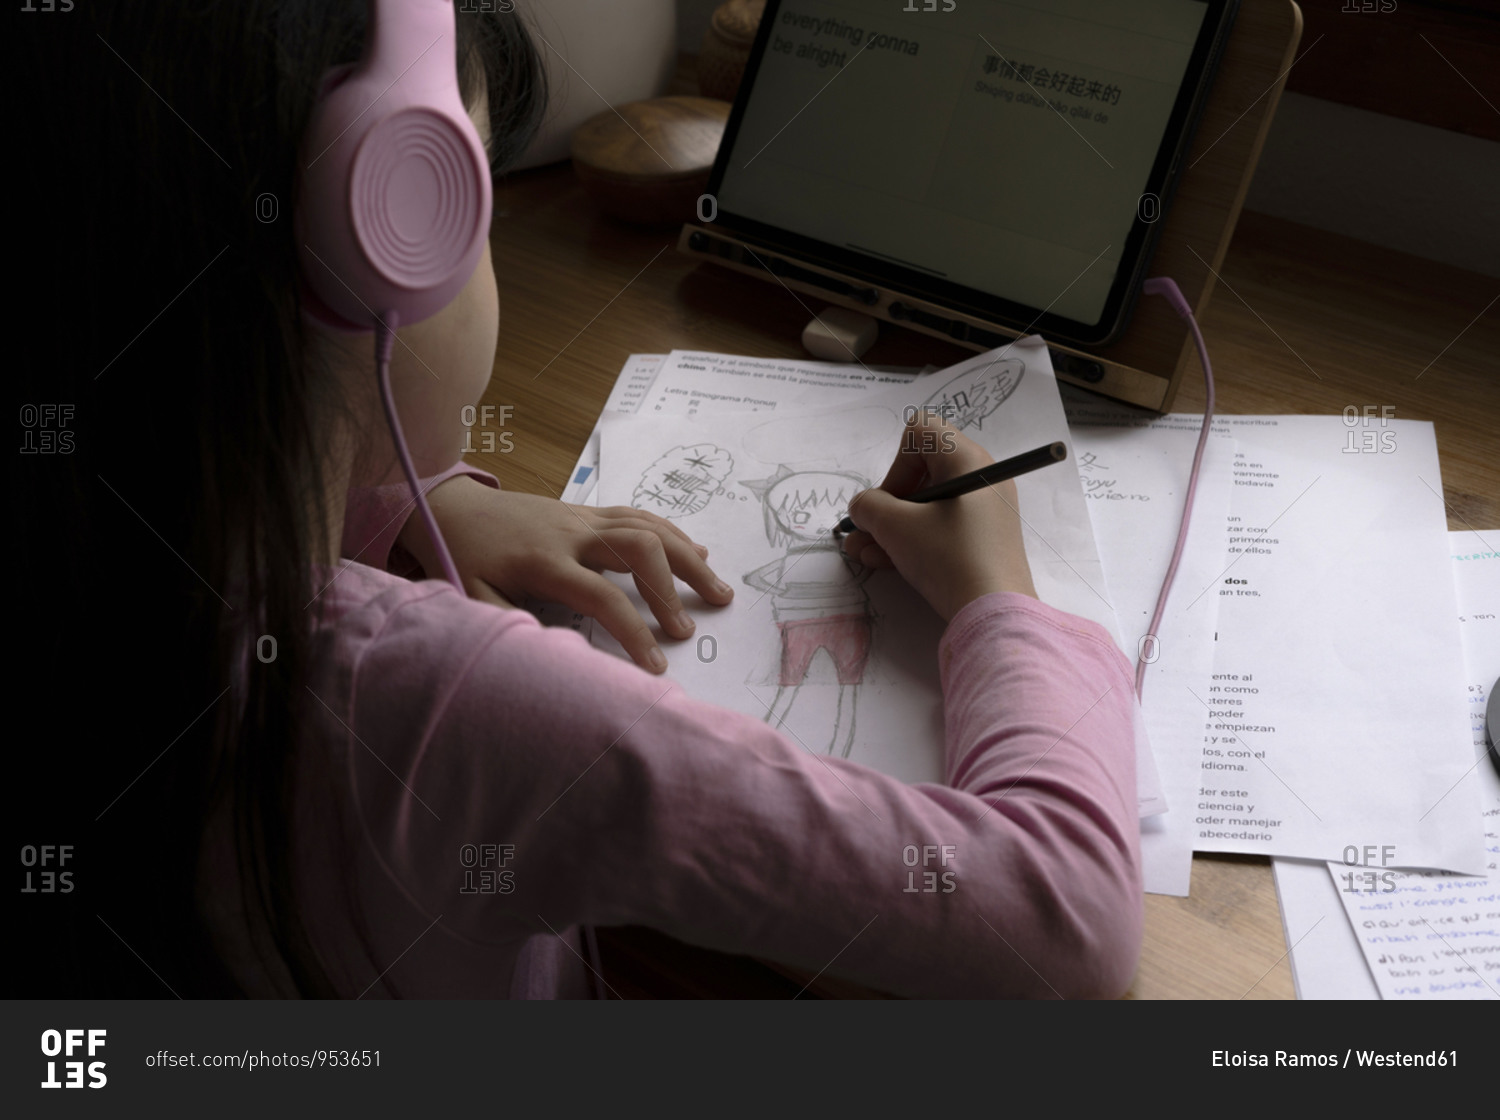 Girl wearing headphones drawing manga comics while using digital tablet at desk in house